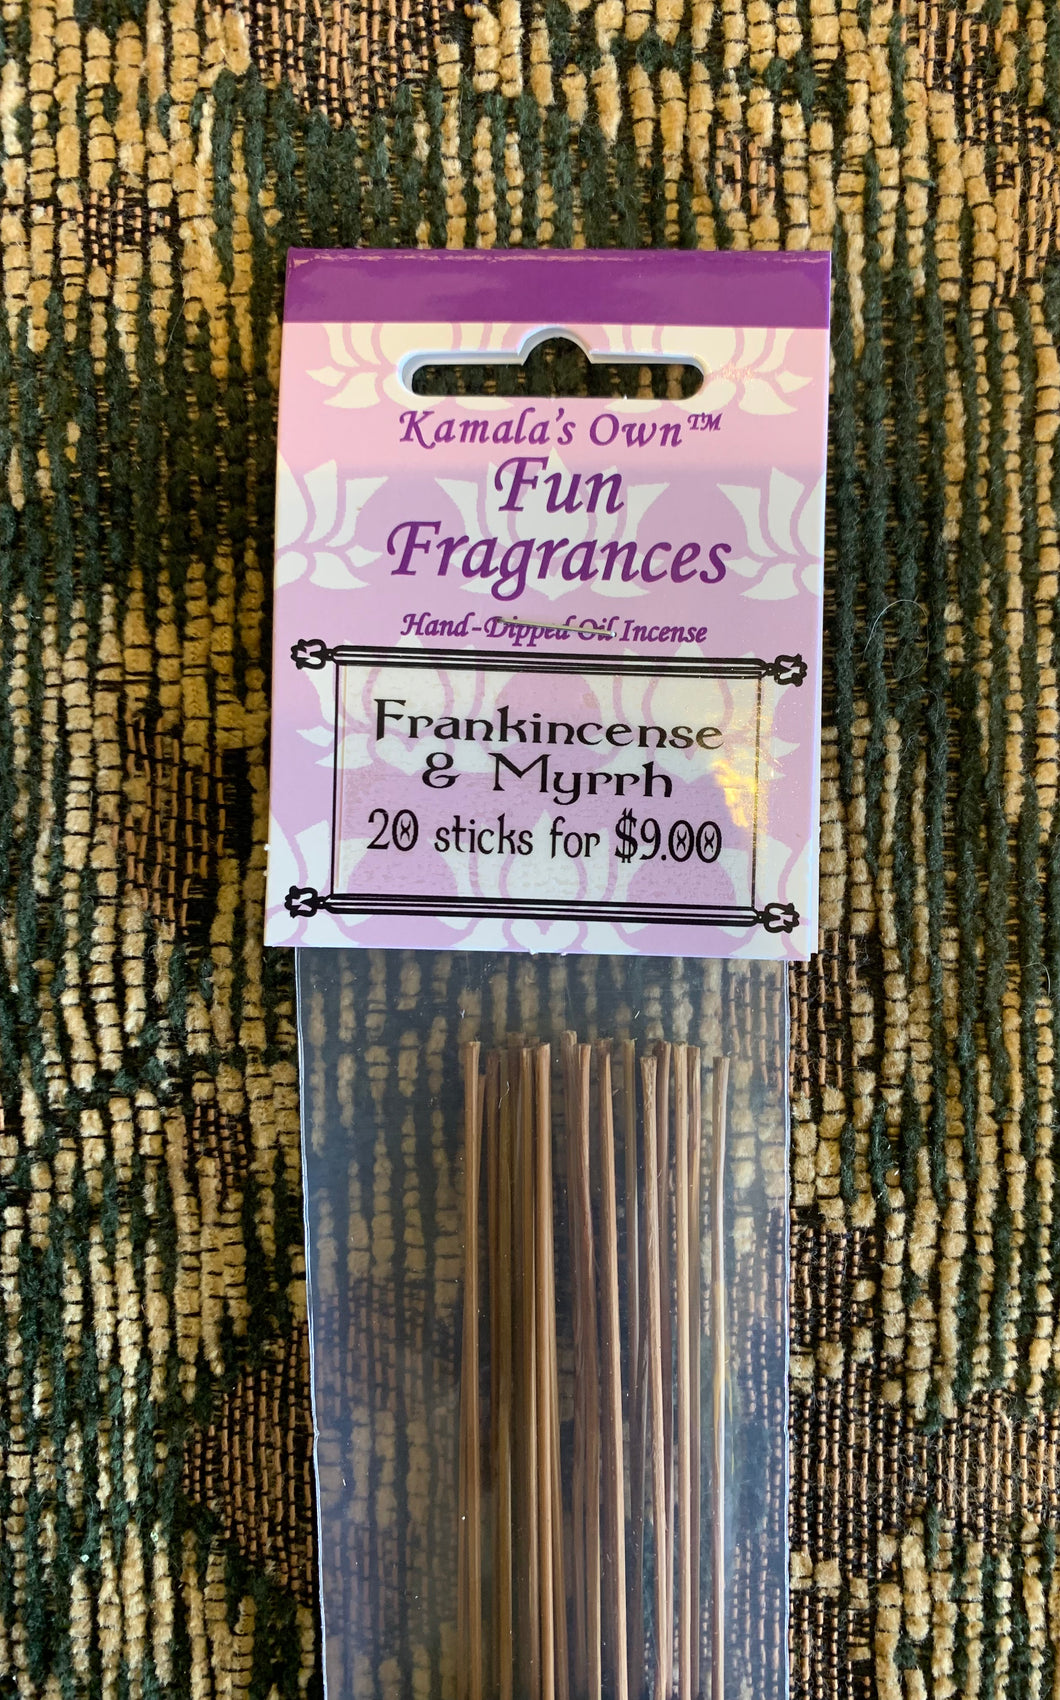 Frankincense and Myrrh sticks